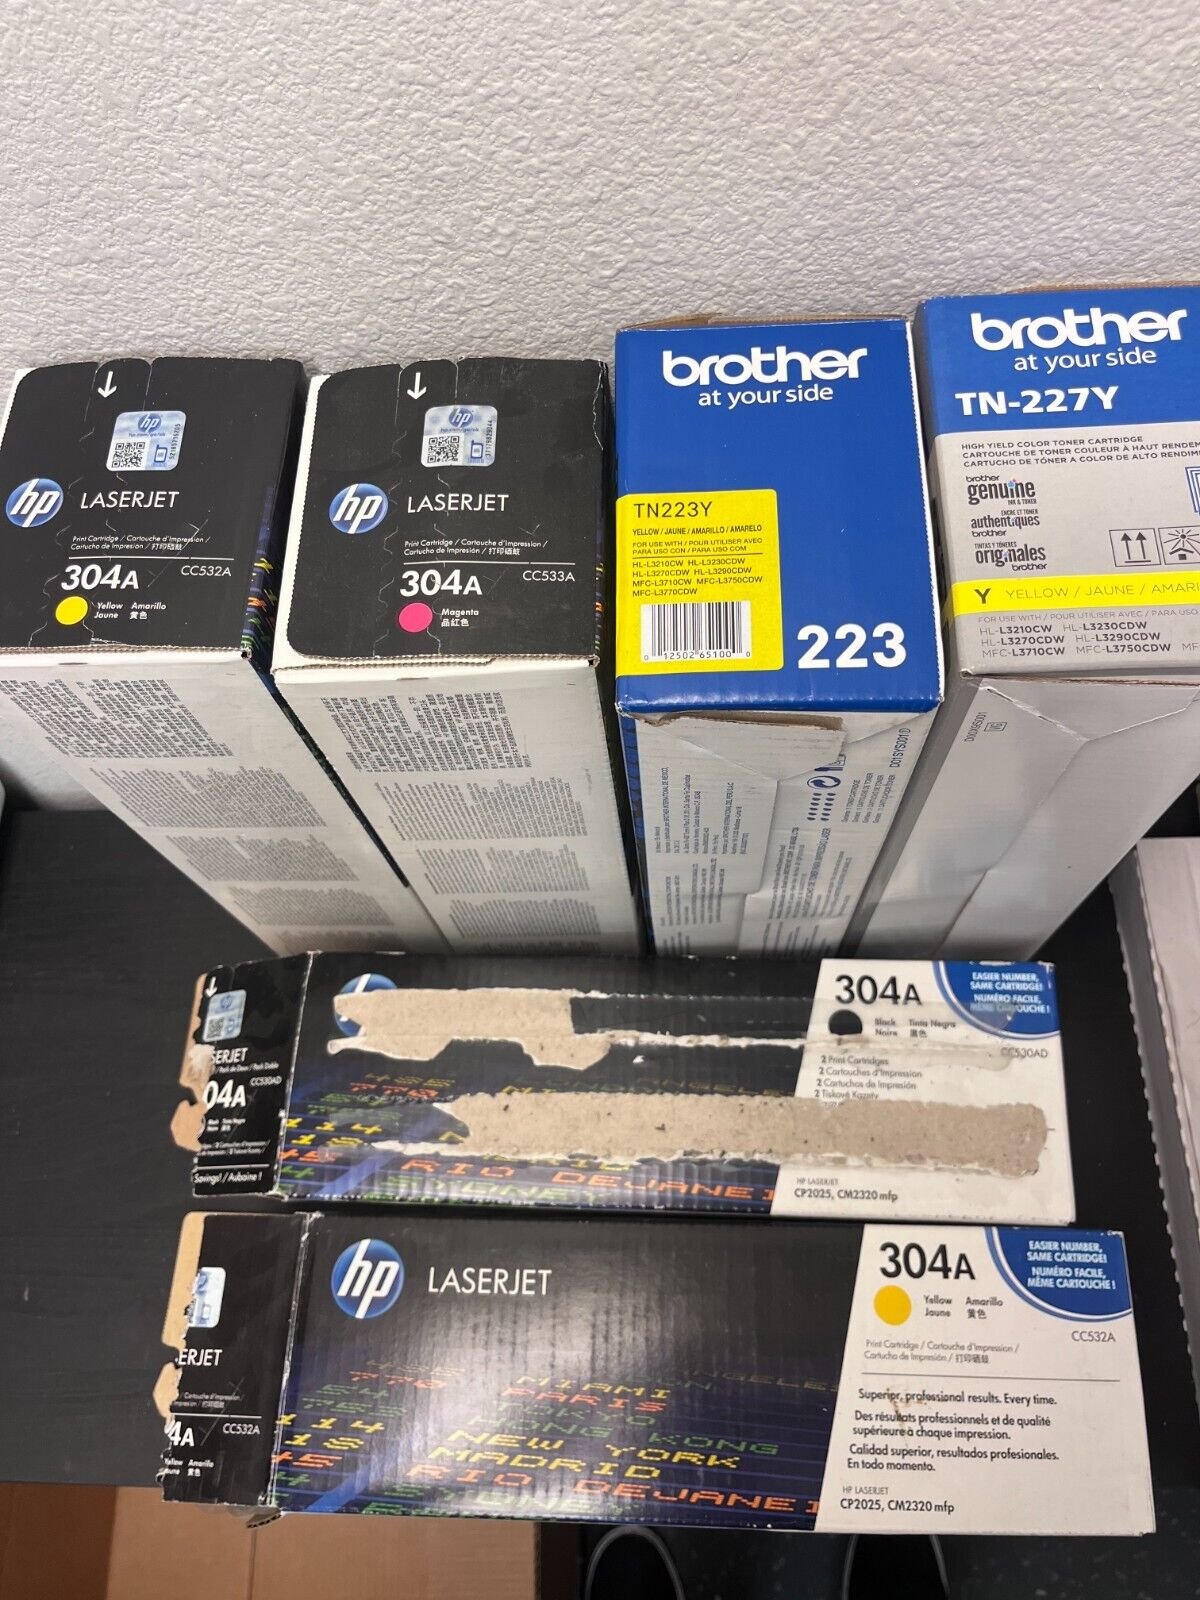 Printer Toner LOT New Brother HP LaserJet 304A TN-227Y TN-223Y Open Box Deal